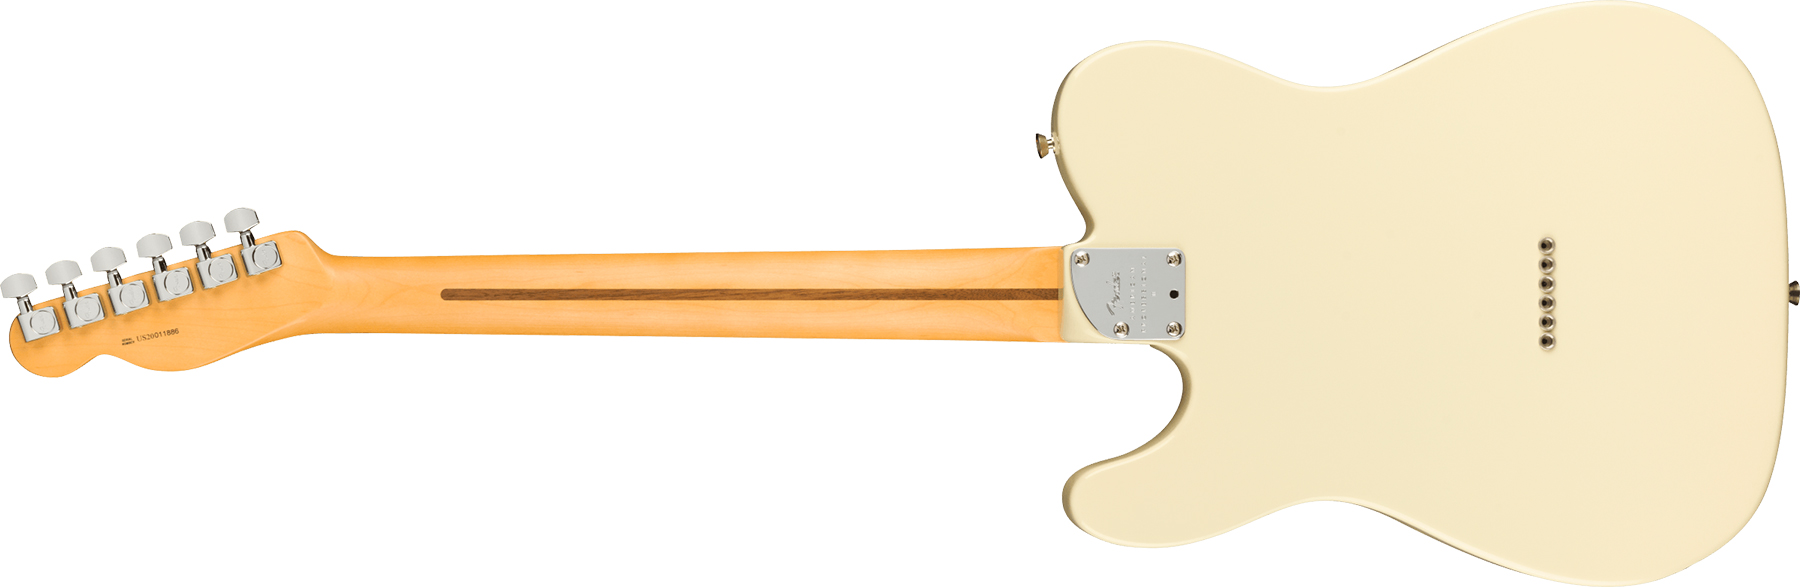 Fender Tele American Professional Ii Usa Rw - Olympic White - Televorm elektrische gitaar - Variation 1